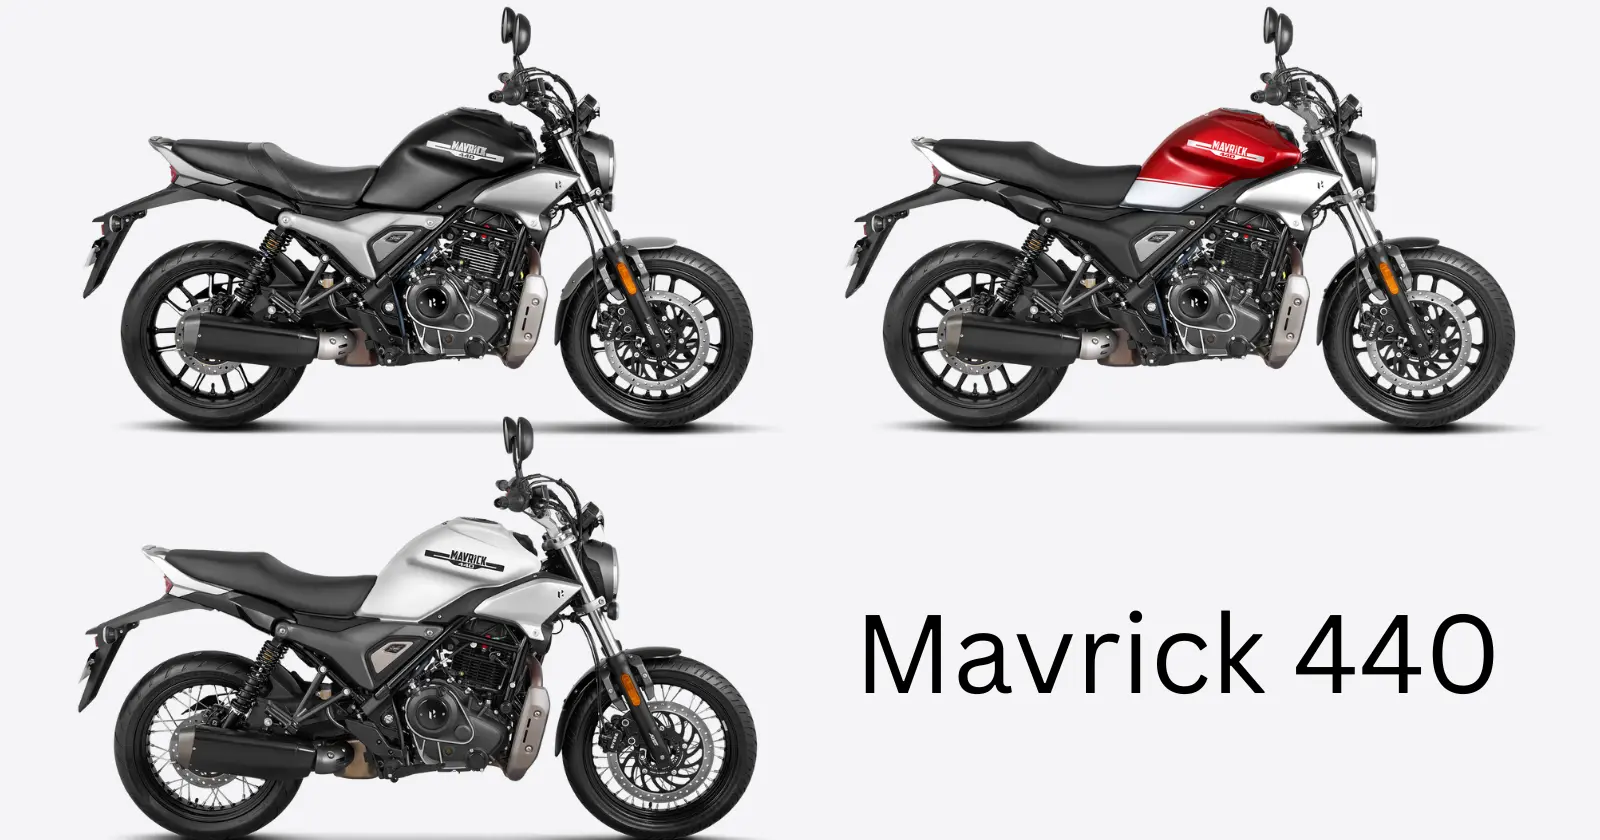 Hero MotoCorp Launches Mavrick 440, Redefining Premium Motorcycling in India